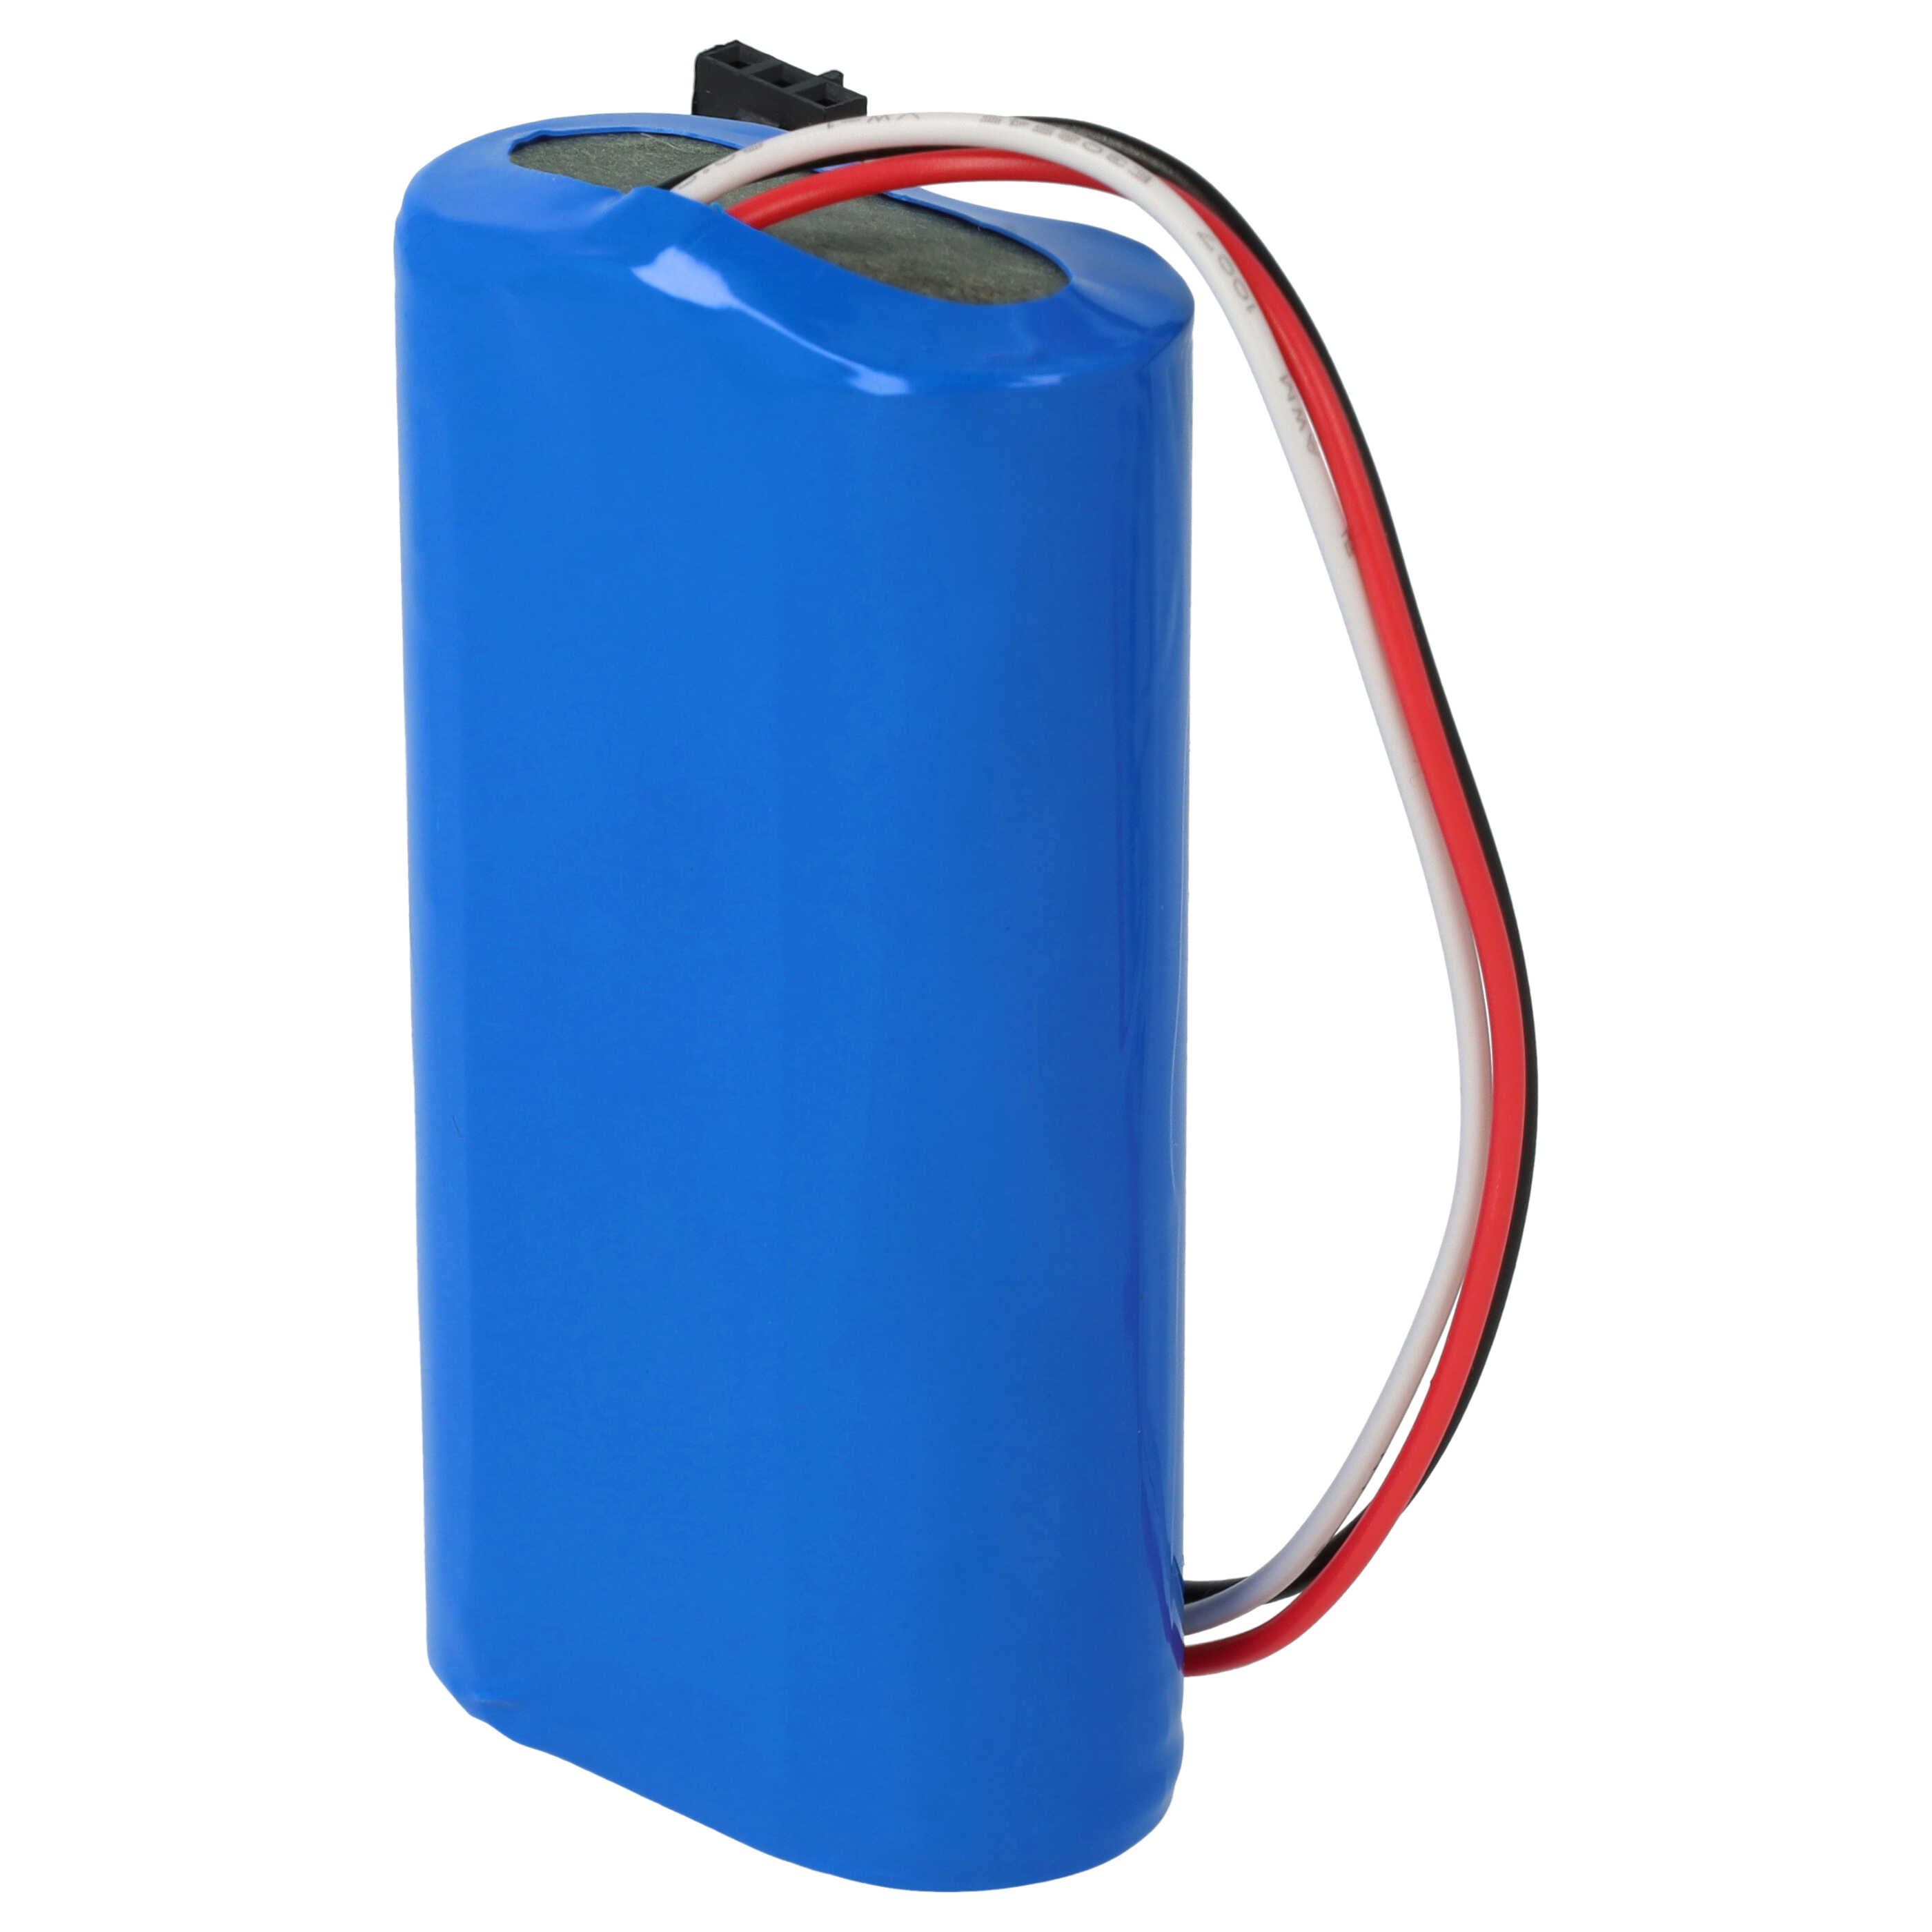 Batteria sostituisce Cosmed A-410-750-002 per strumenti medici Cosmed - 2600mAh 7,4V Li-Ion